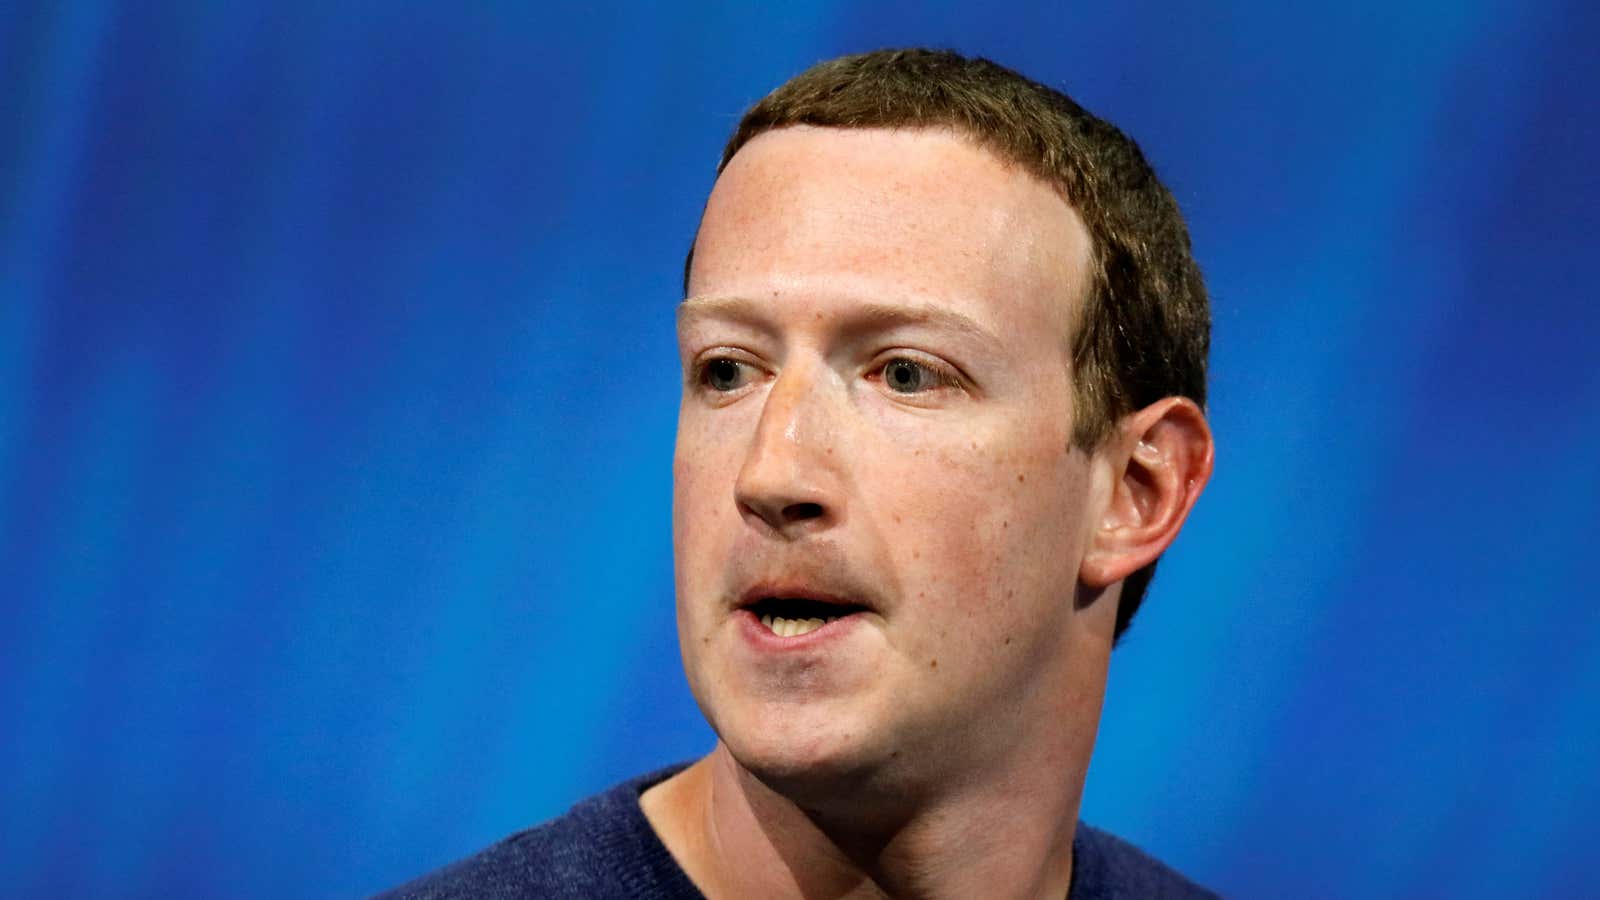 The fine is worth 0.0008% of Mark Zuckerberg’s net worth.